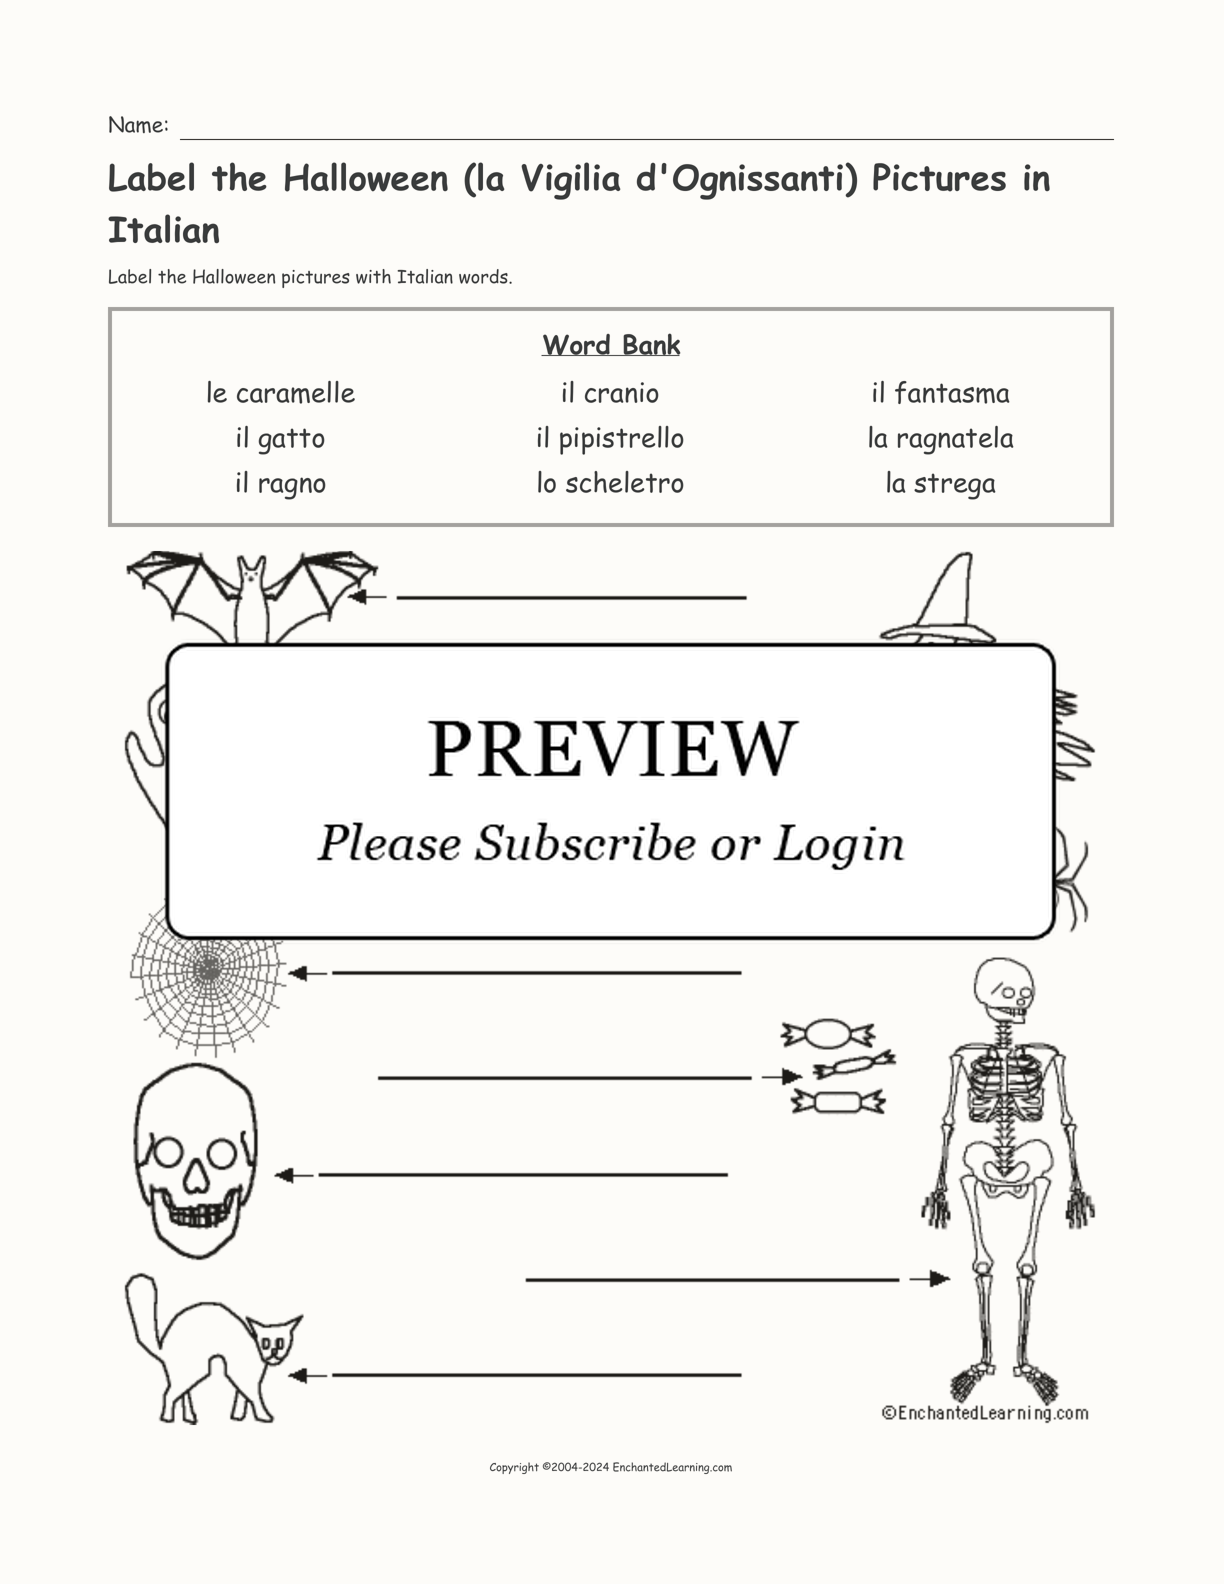 Label the Halloween (la Vigilia d'Ognissanti) Pictures in Italian interactive worksheet page 1